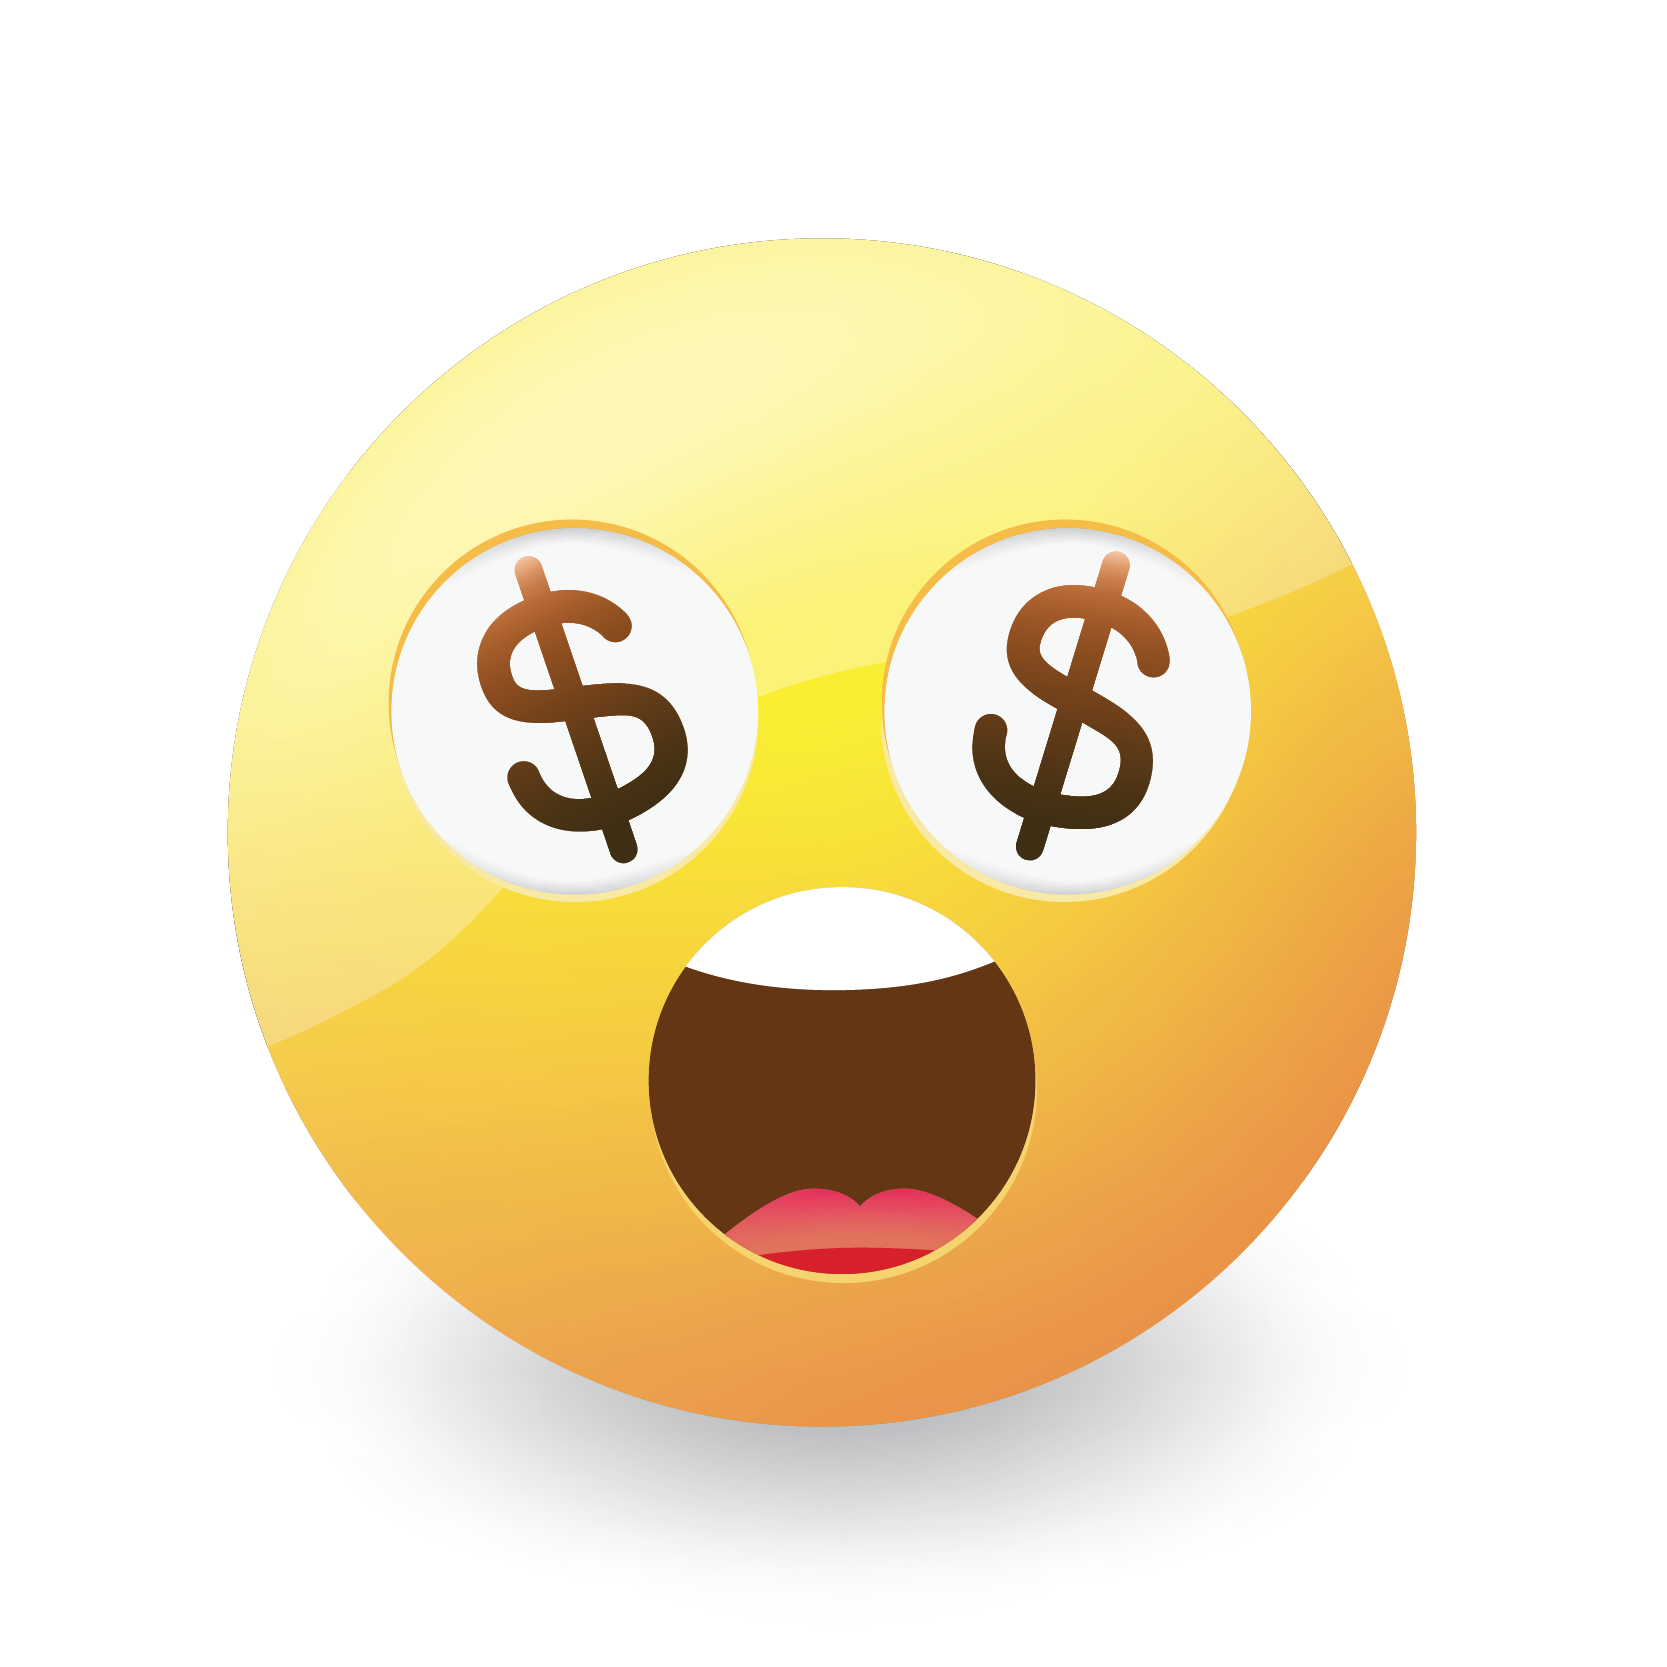 Greed emoji